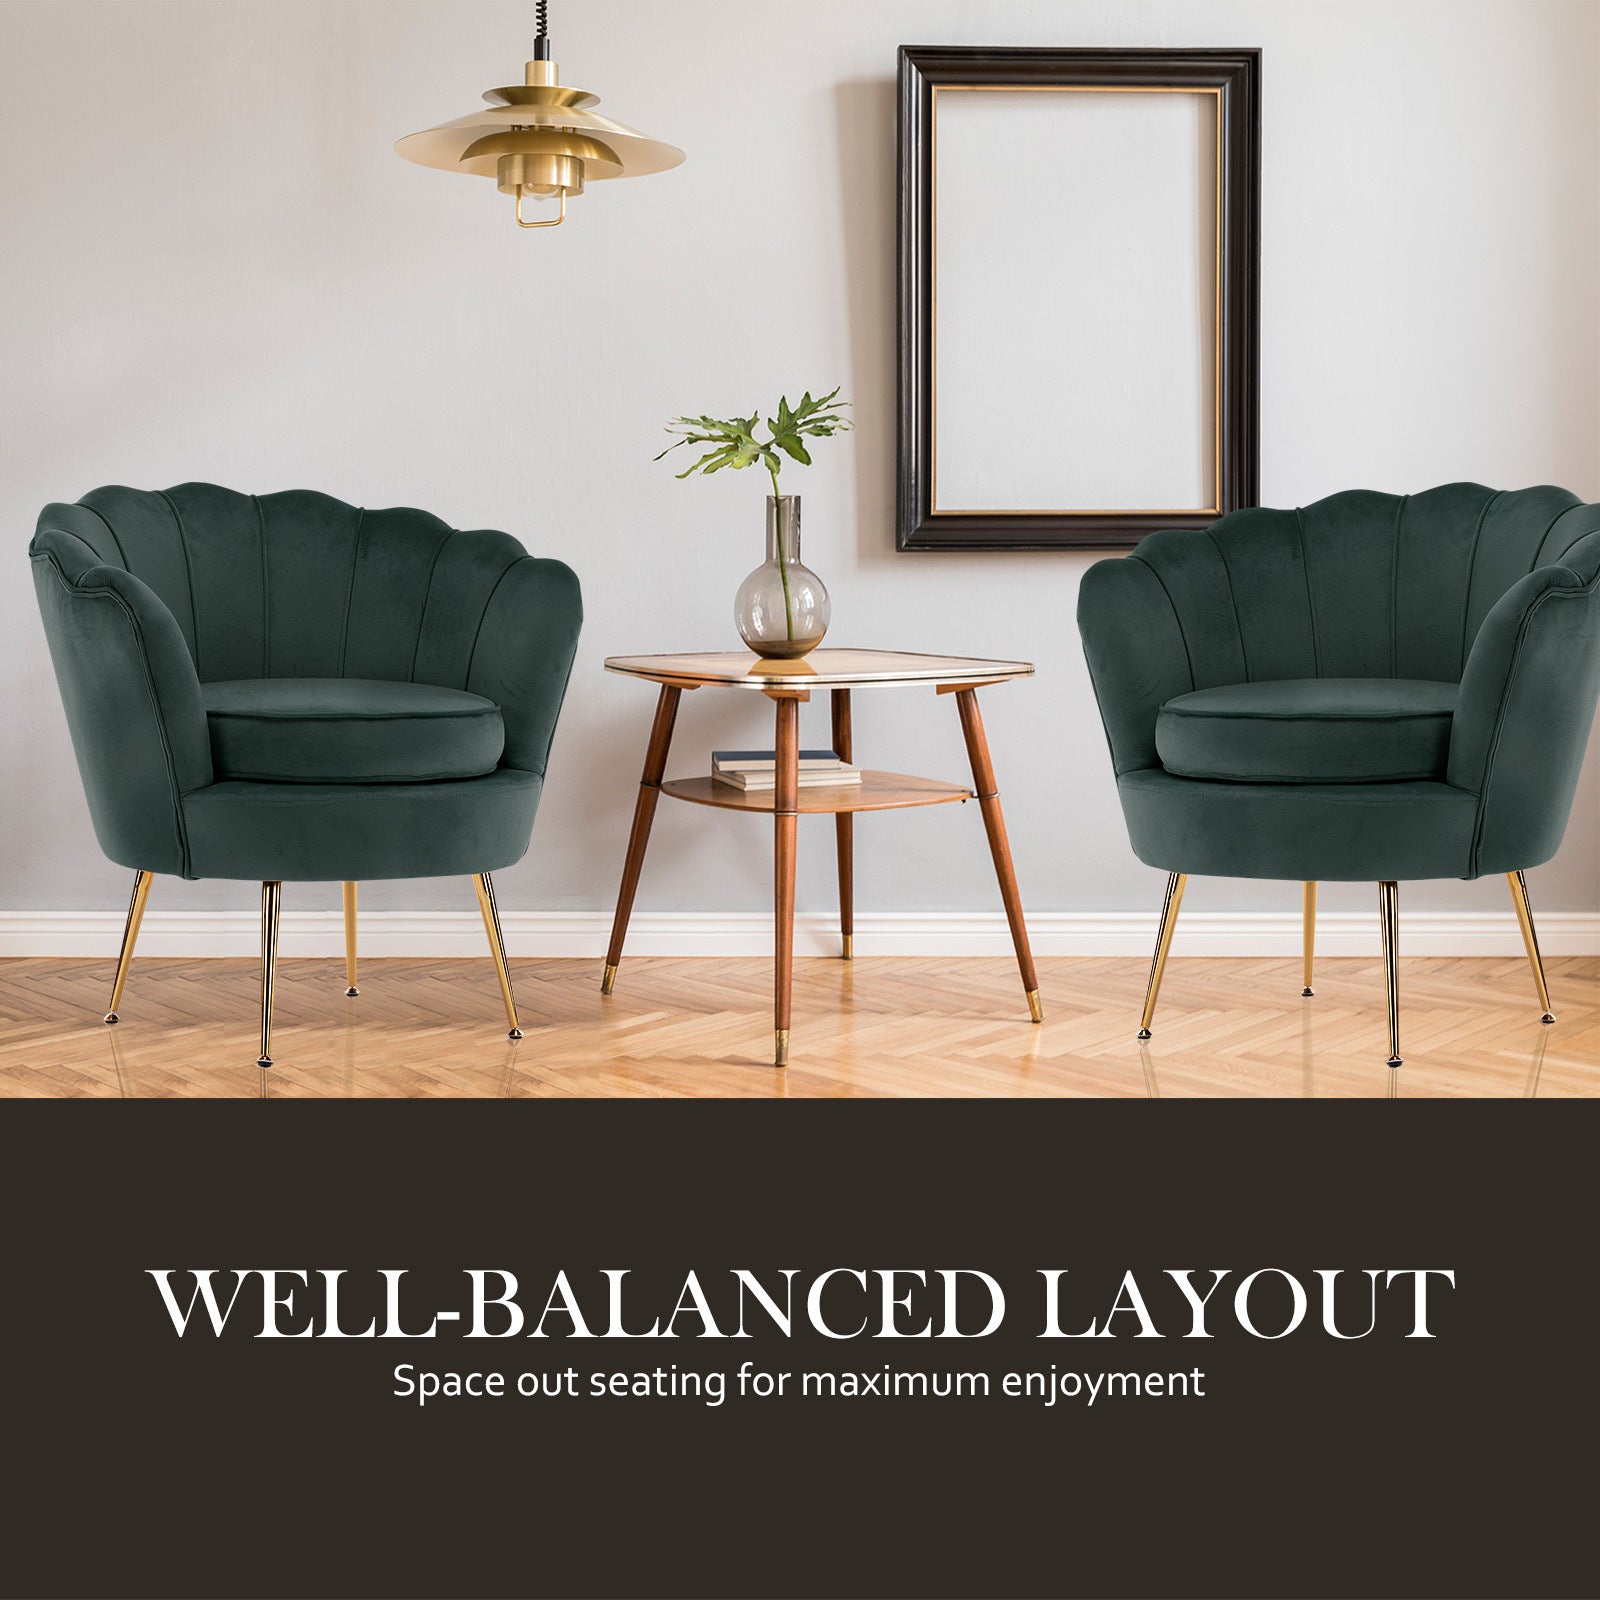 La Bella Shell Scallop Green Armchair Accent Chair Velvet + Round Ottoman Footstool - BM House & Garden